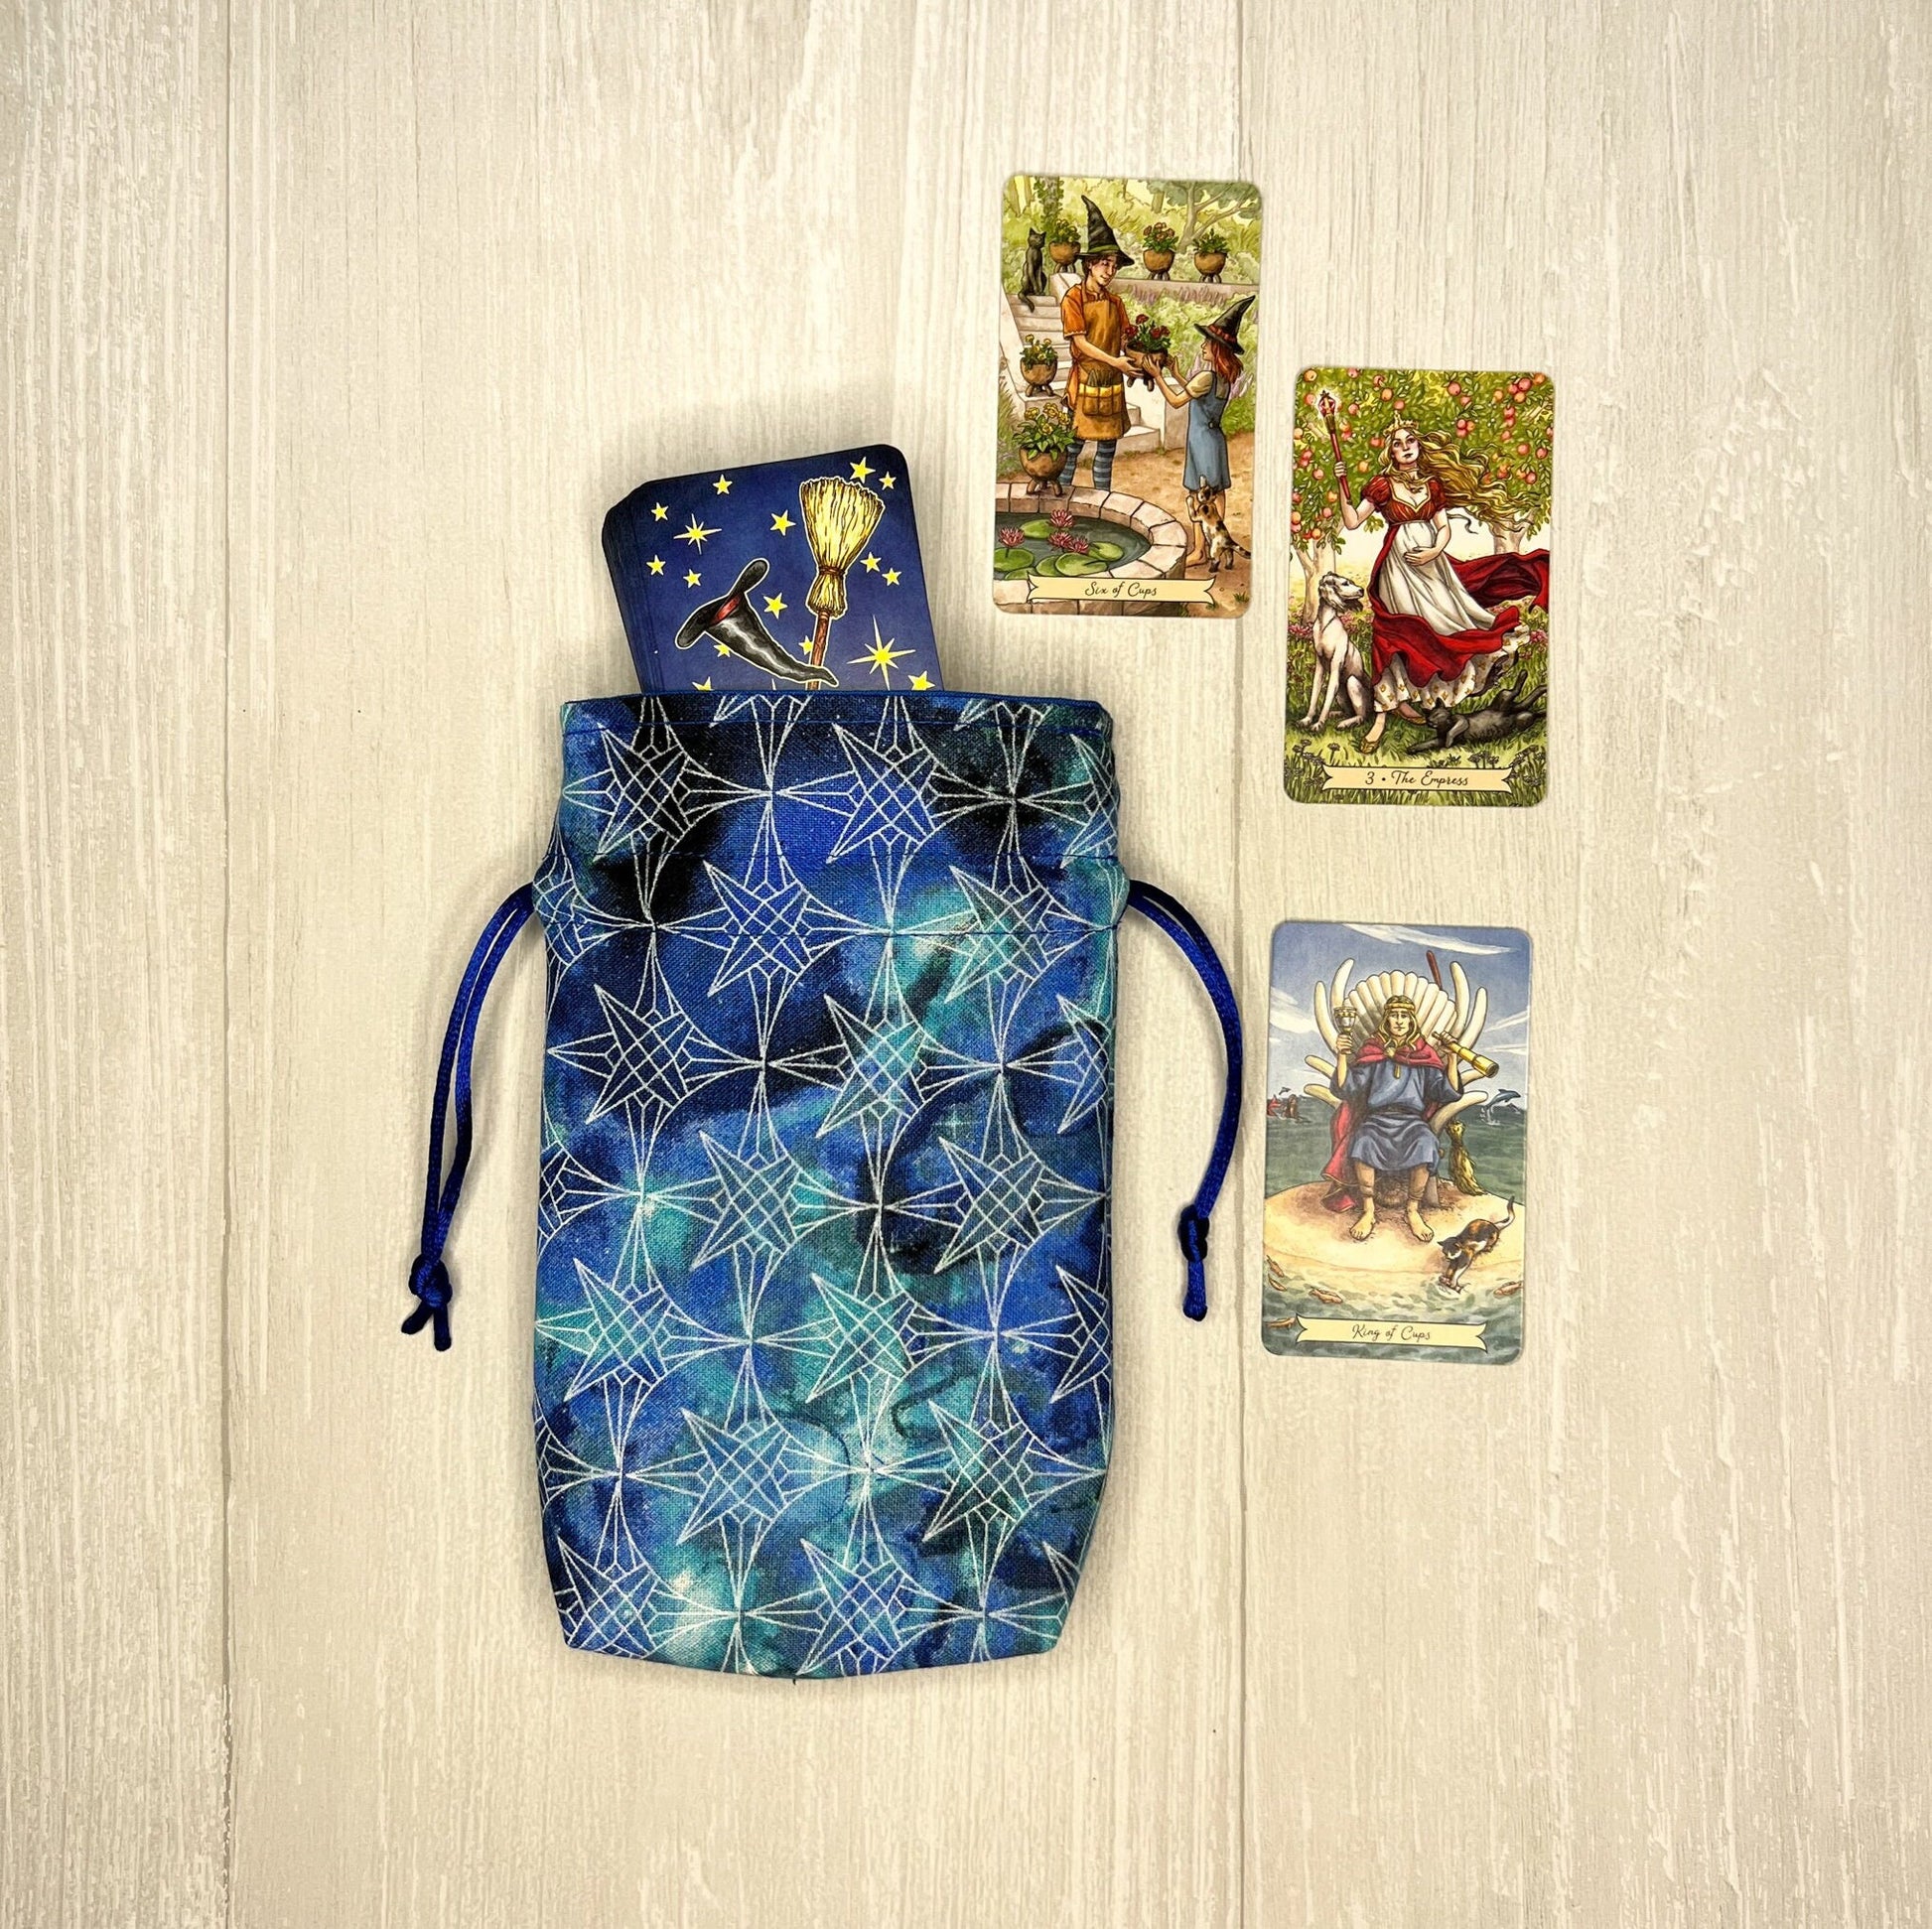 Geometric Star Mini Tarot Deck Bag, Drawstring Pouch, Pocket Tarot, Dice Rune Bag, Witchcraft Wiccan Pagan Supplies Gifts, Divination Tools